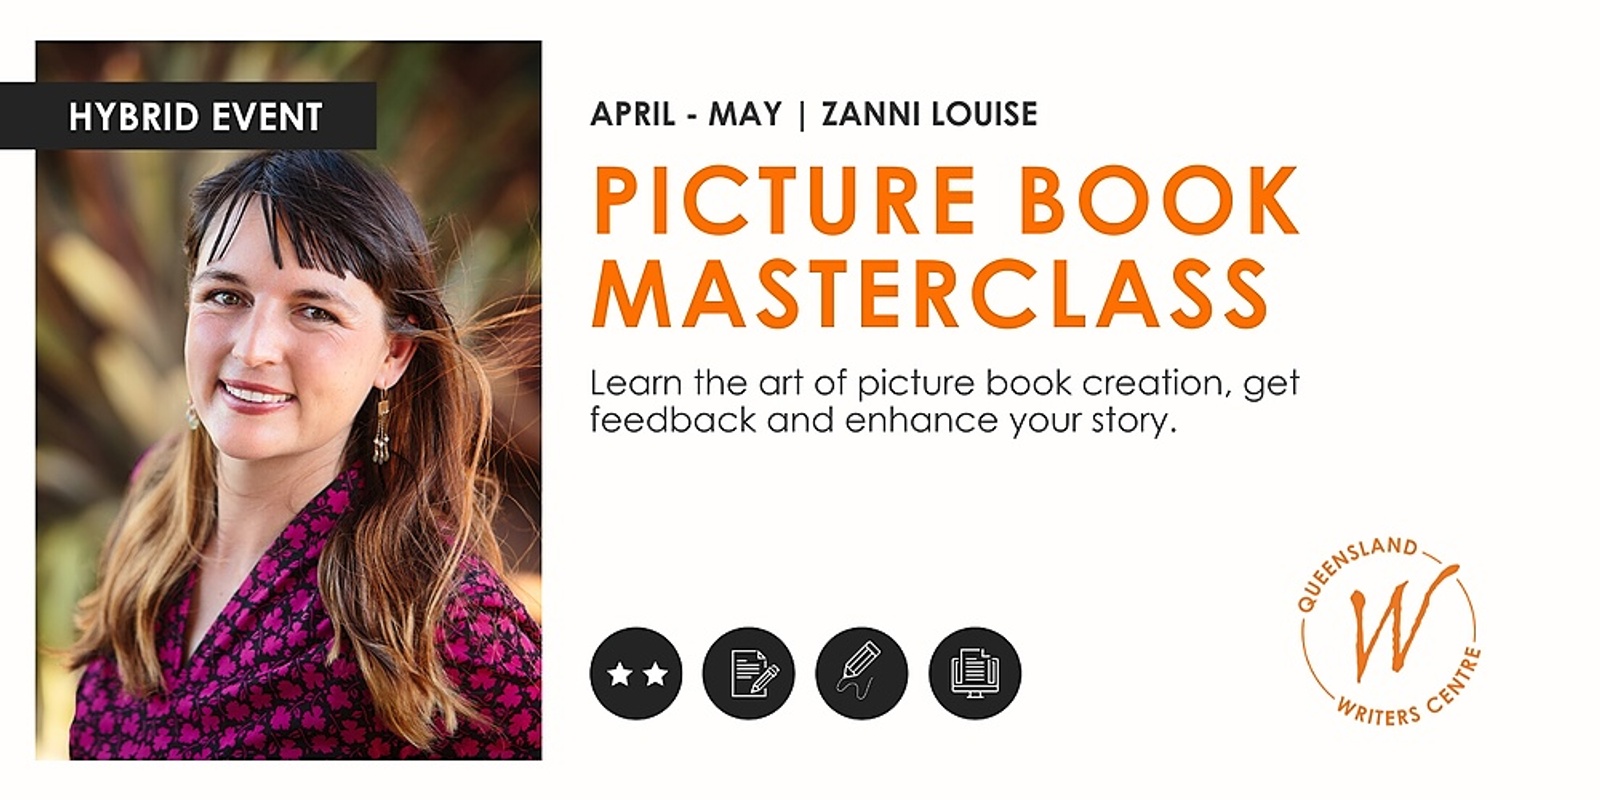 Picture Book Masterclass with Zanni Louise